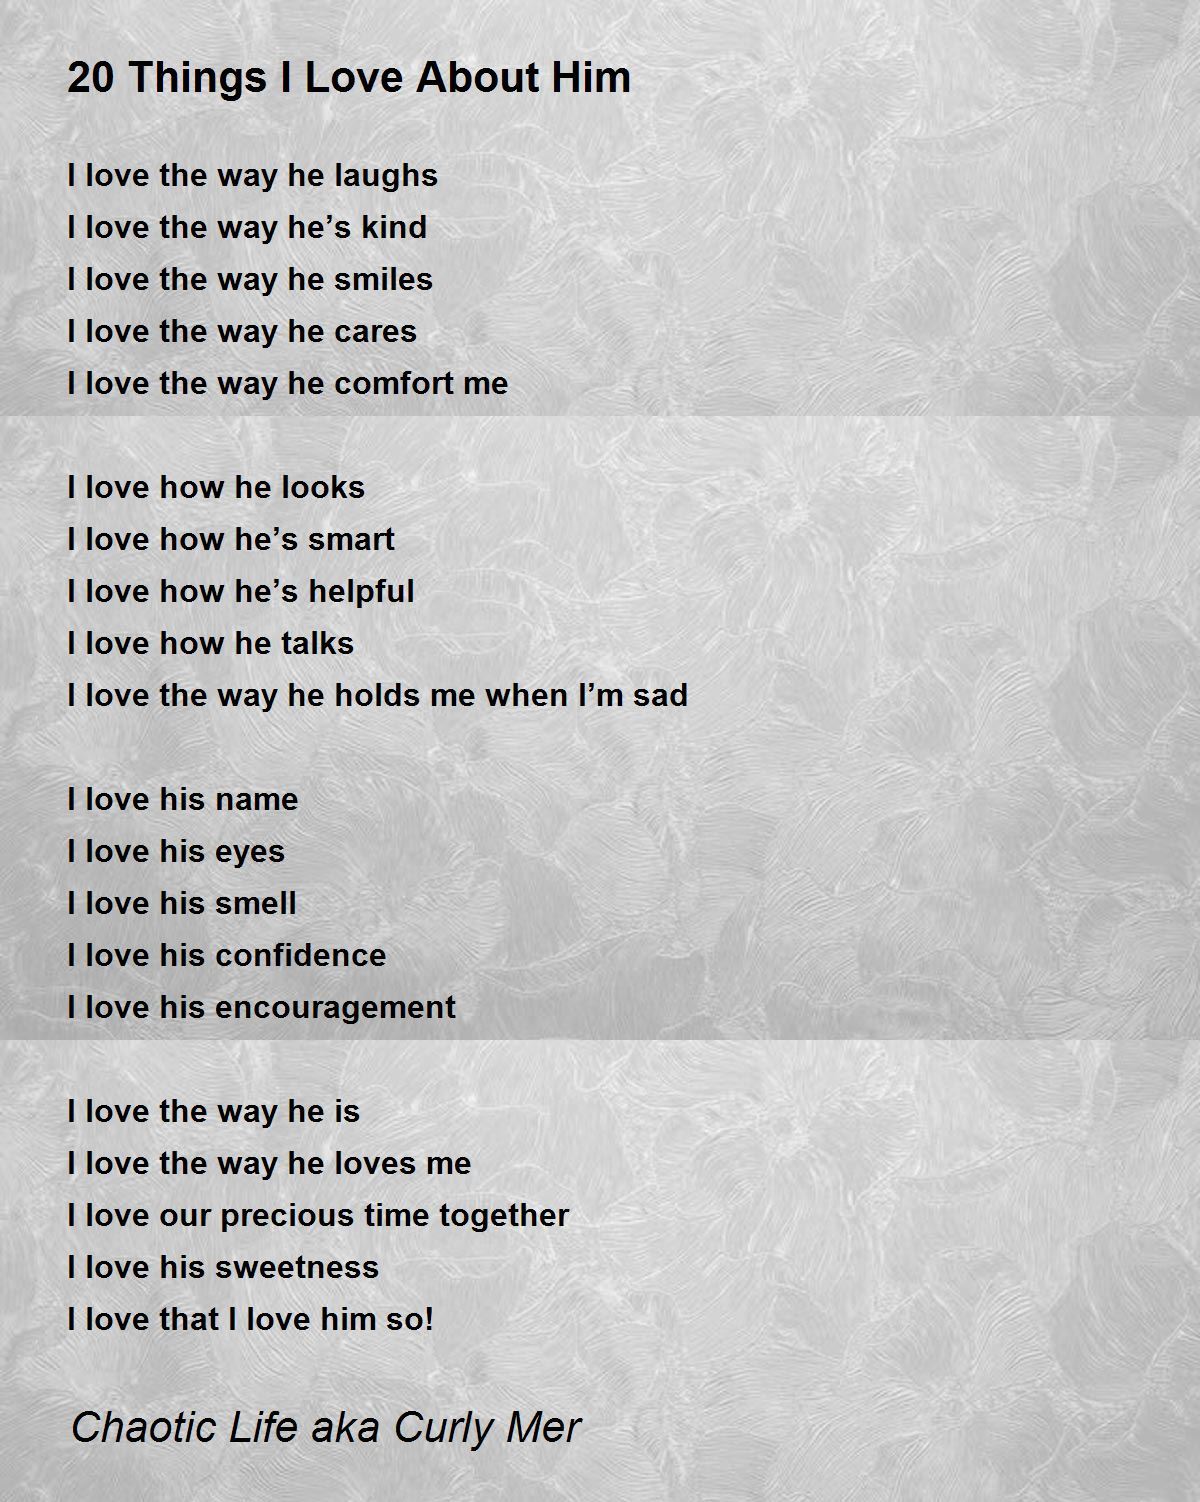 20 Things I Love About Him - 20 Things I Love About Him Poem by